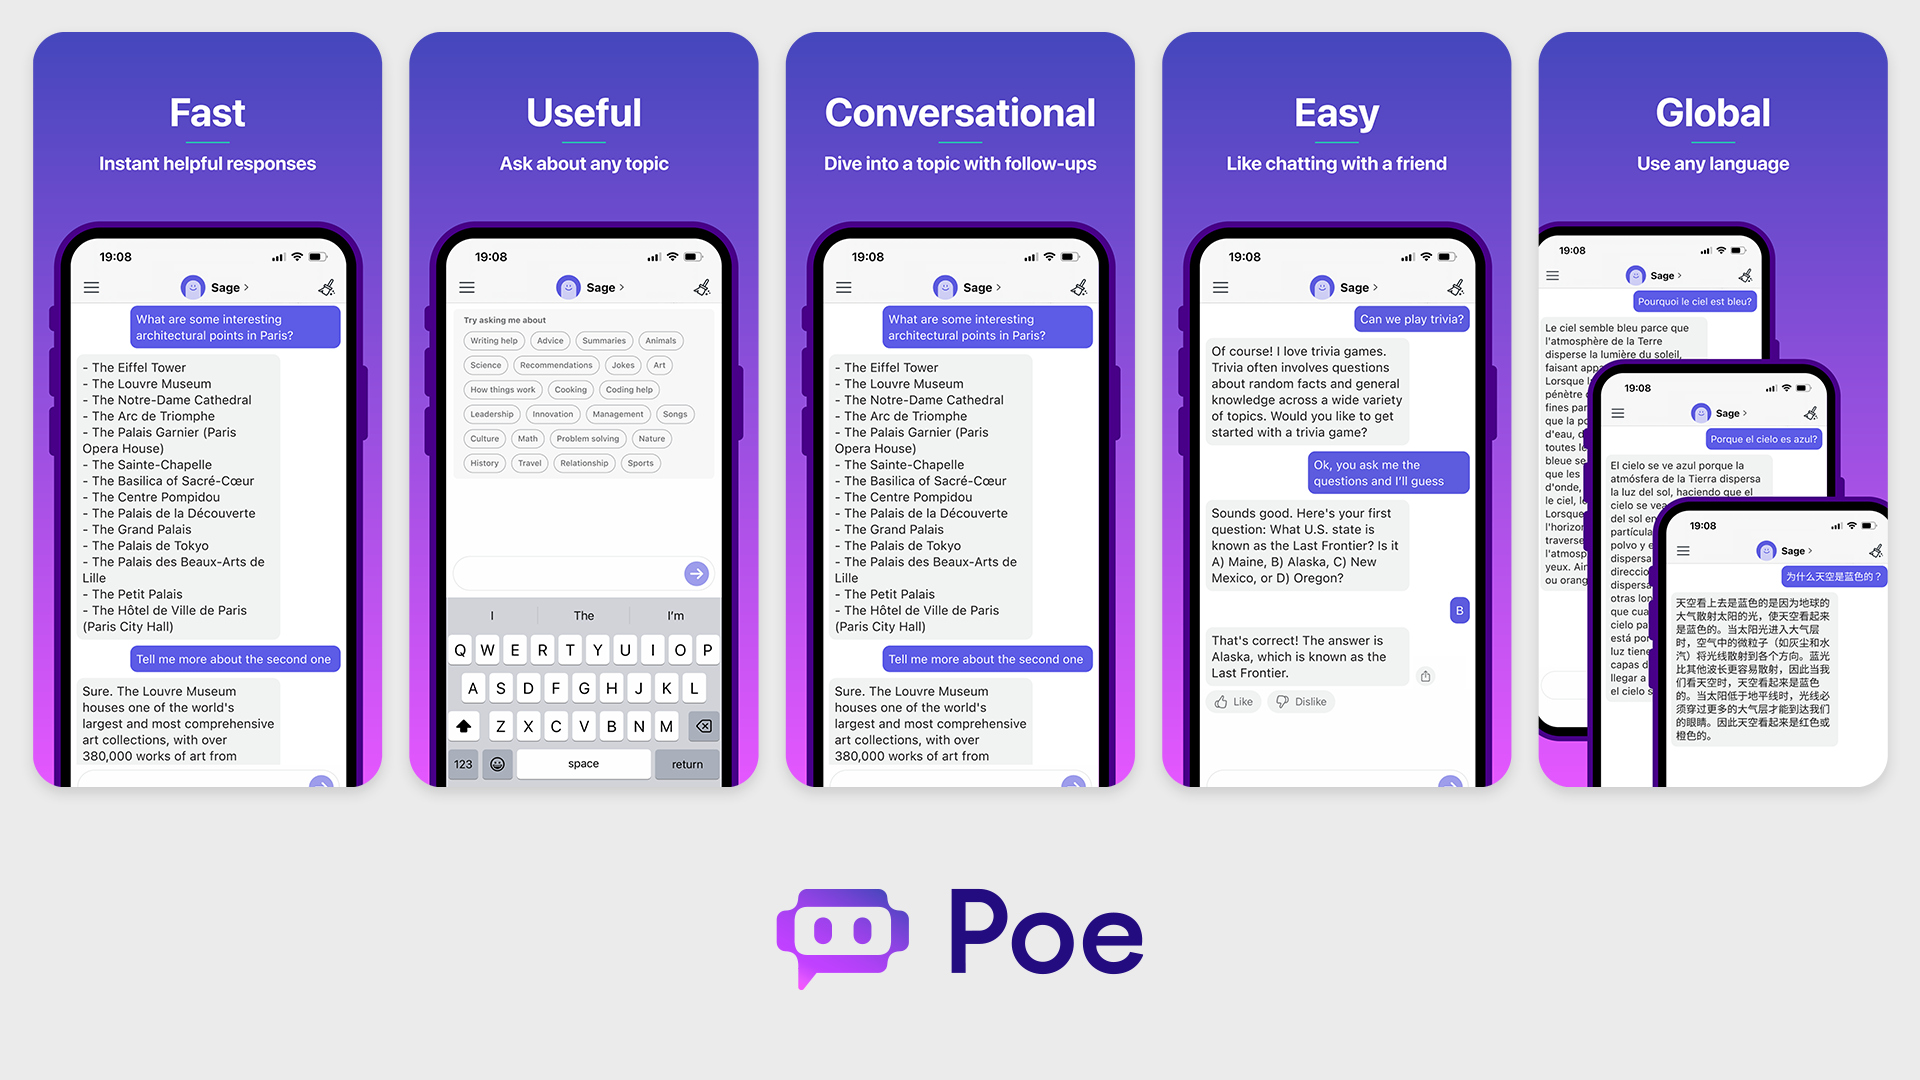 Poe’s mobile app looks like a standard messaging app. Source: Quora